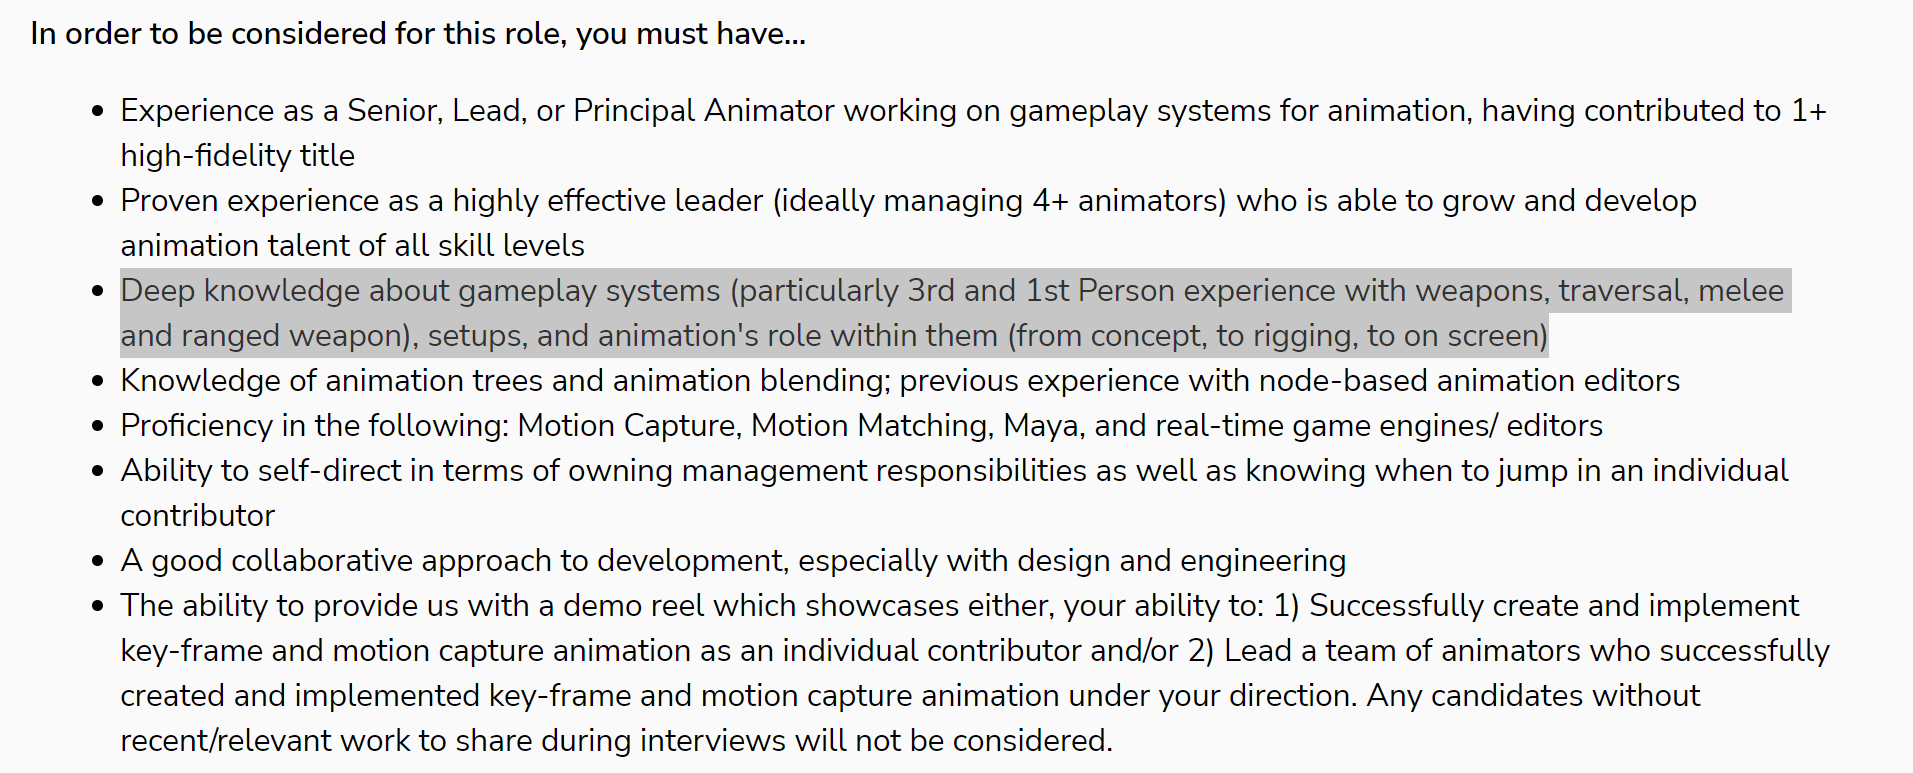 Crystal Dynamics Perfect Dark job listing